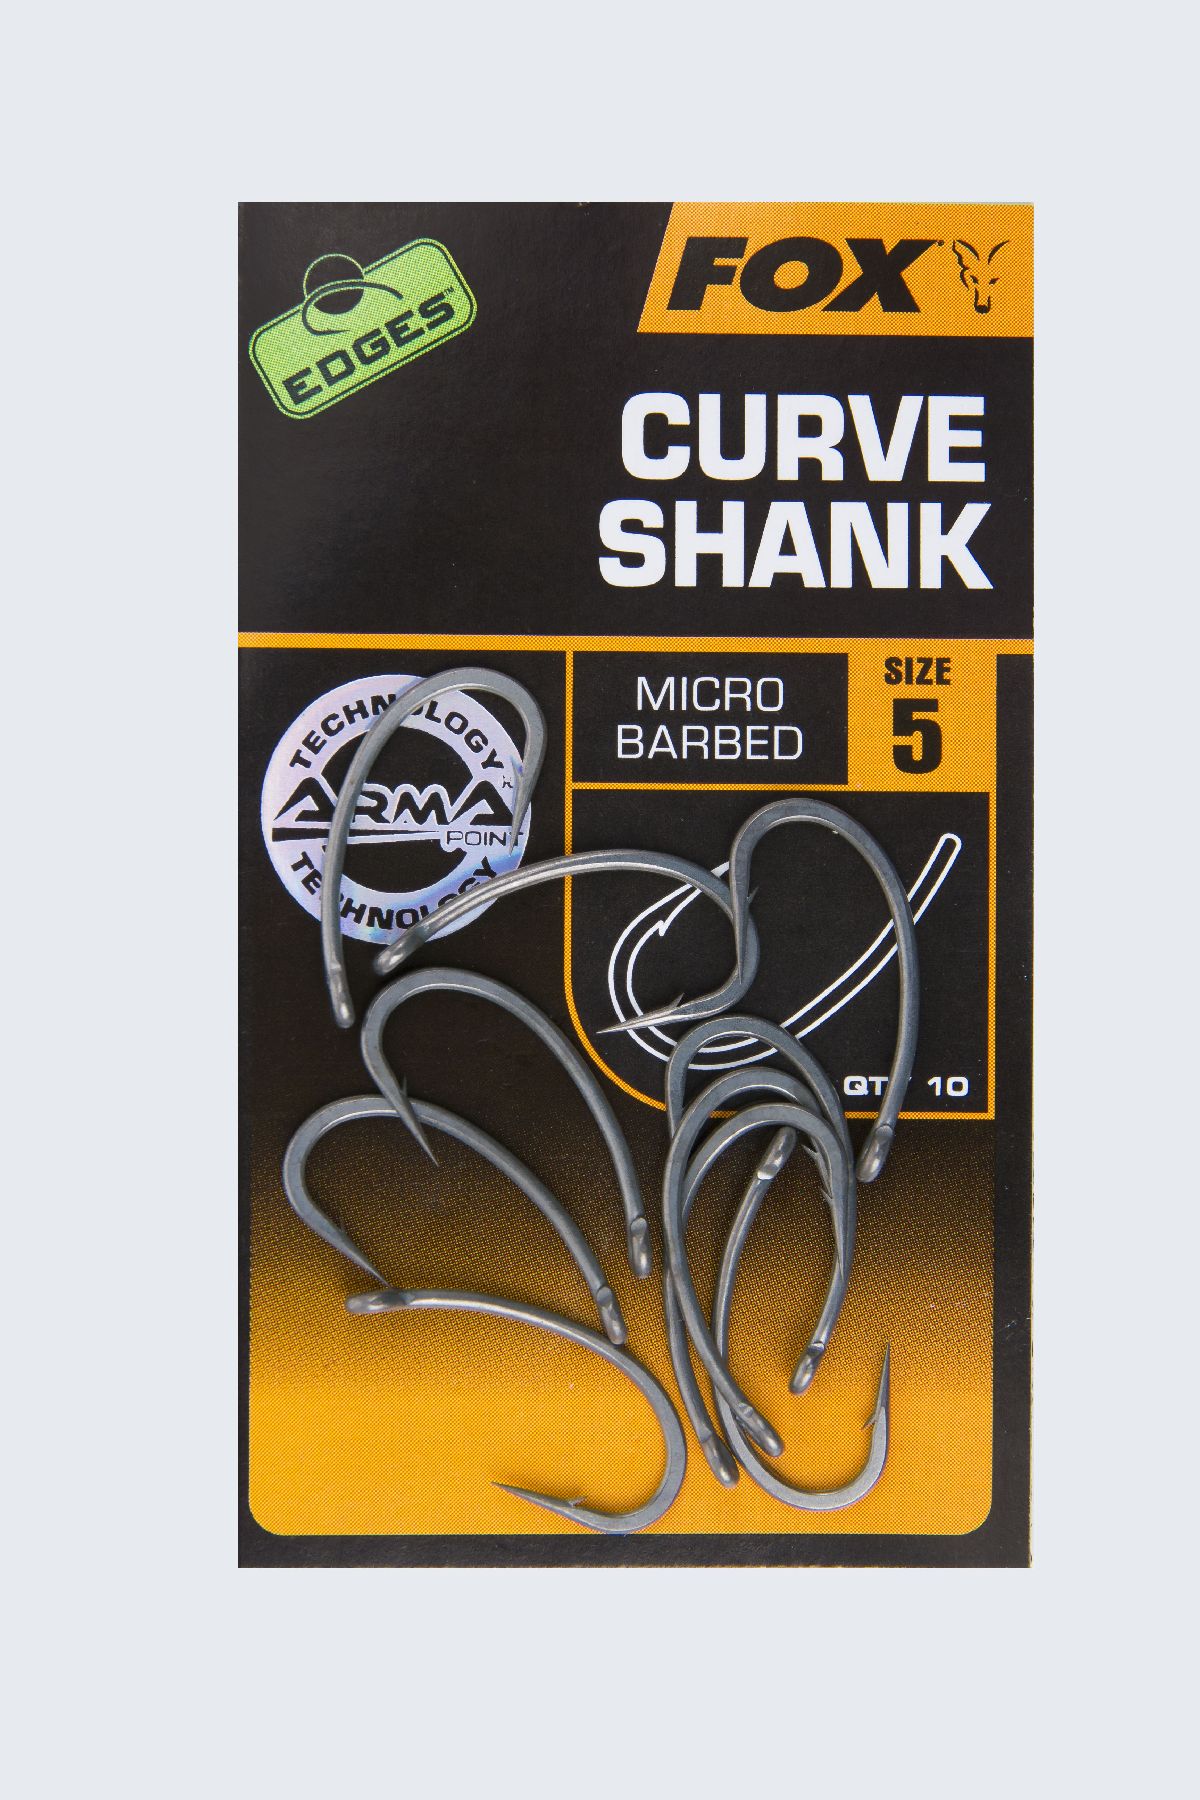 Fox Armapoint Edges Curve Shank Hooks - Micro Barbed (10 pcs)